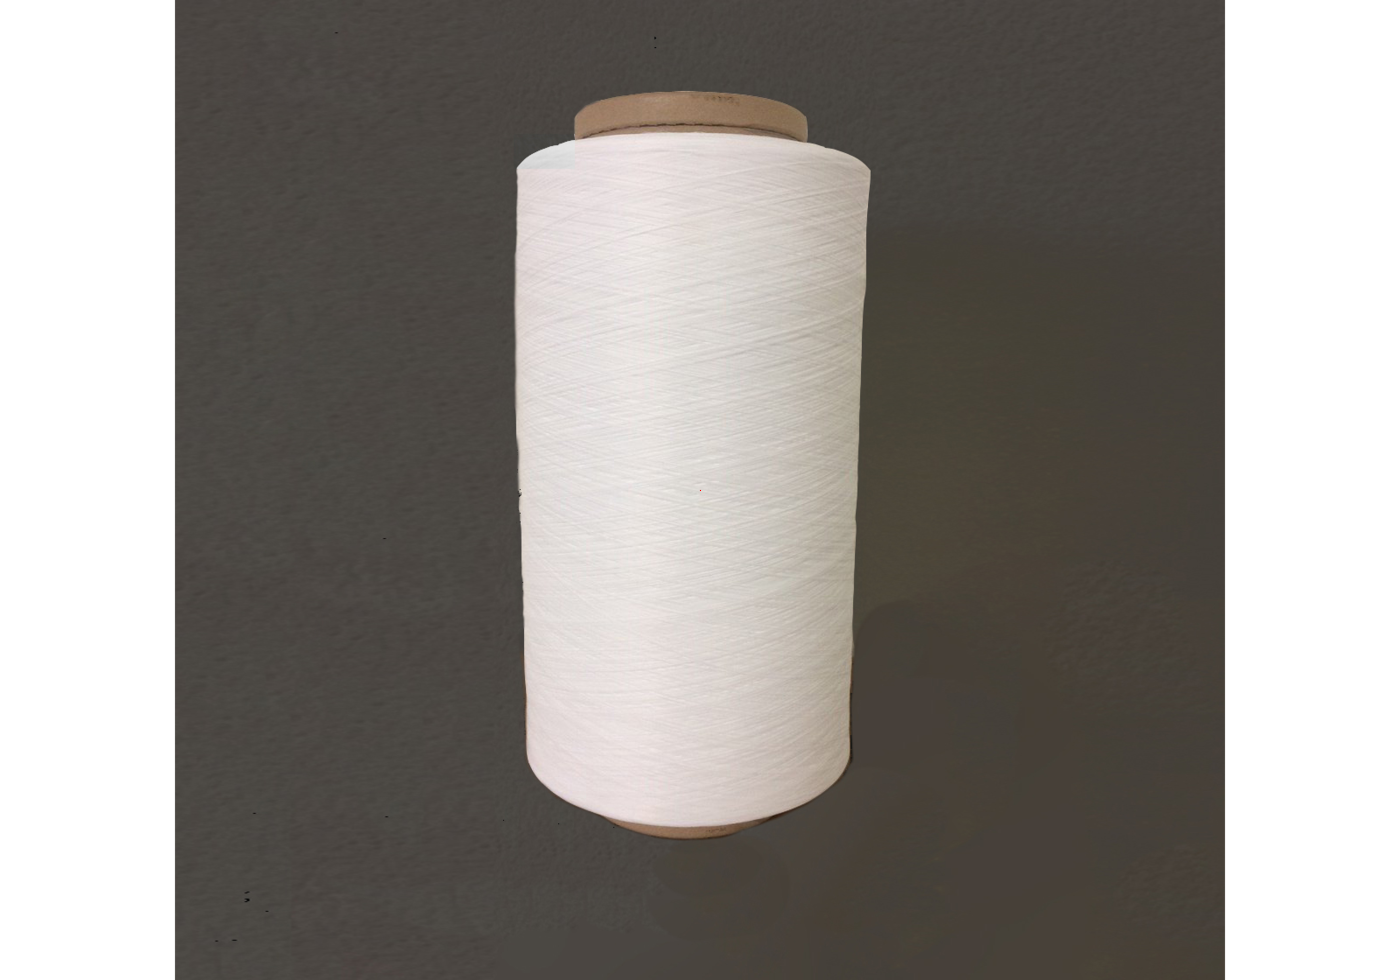 HDPE multilfilament yarn in white